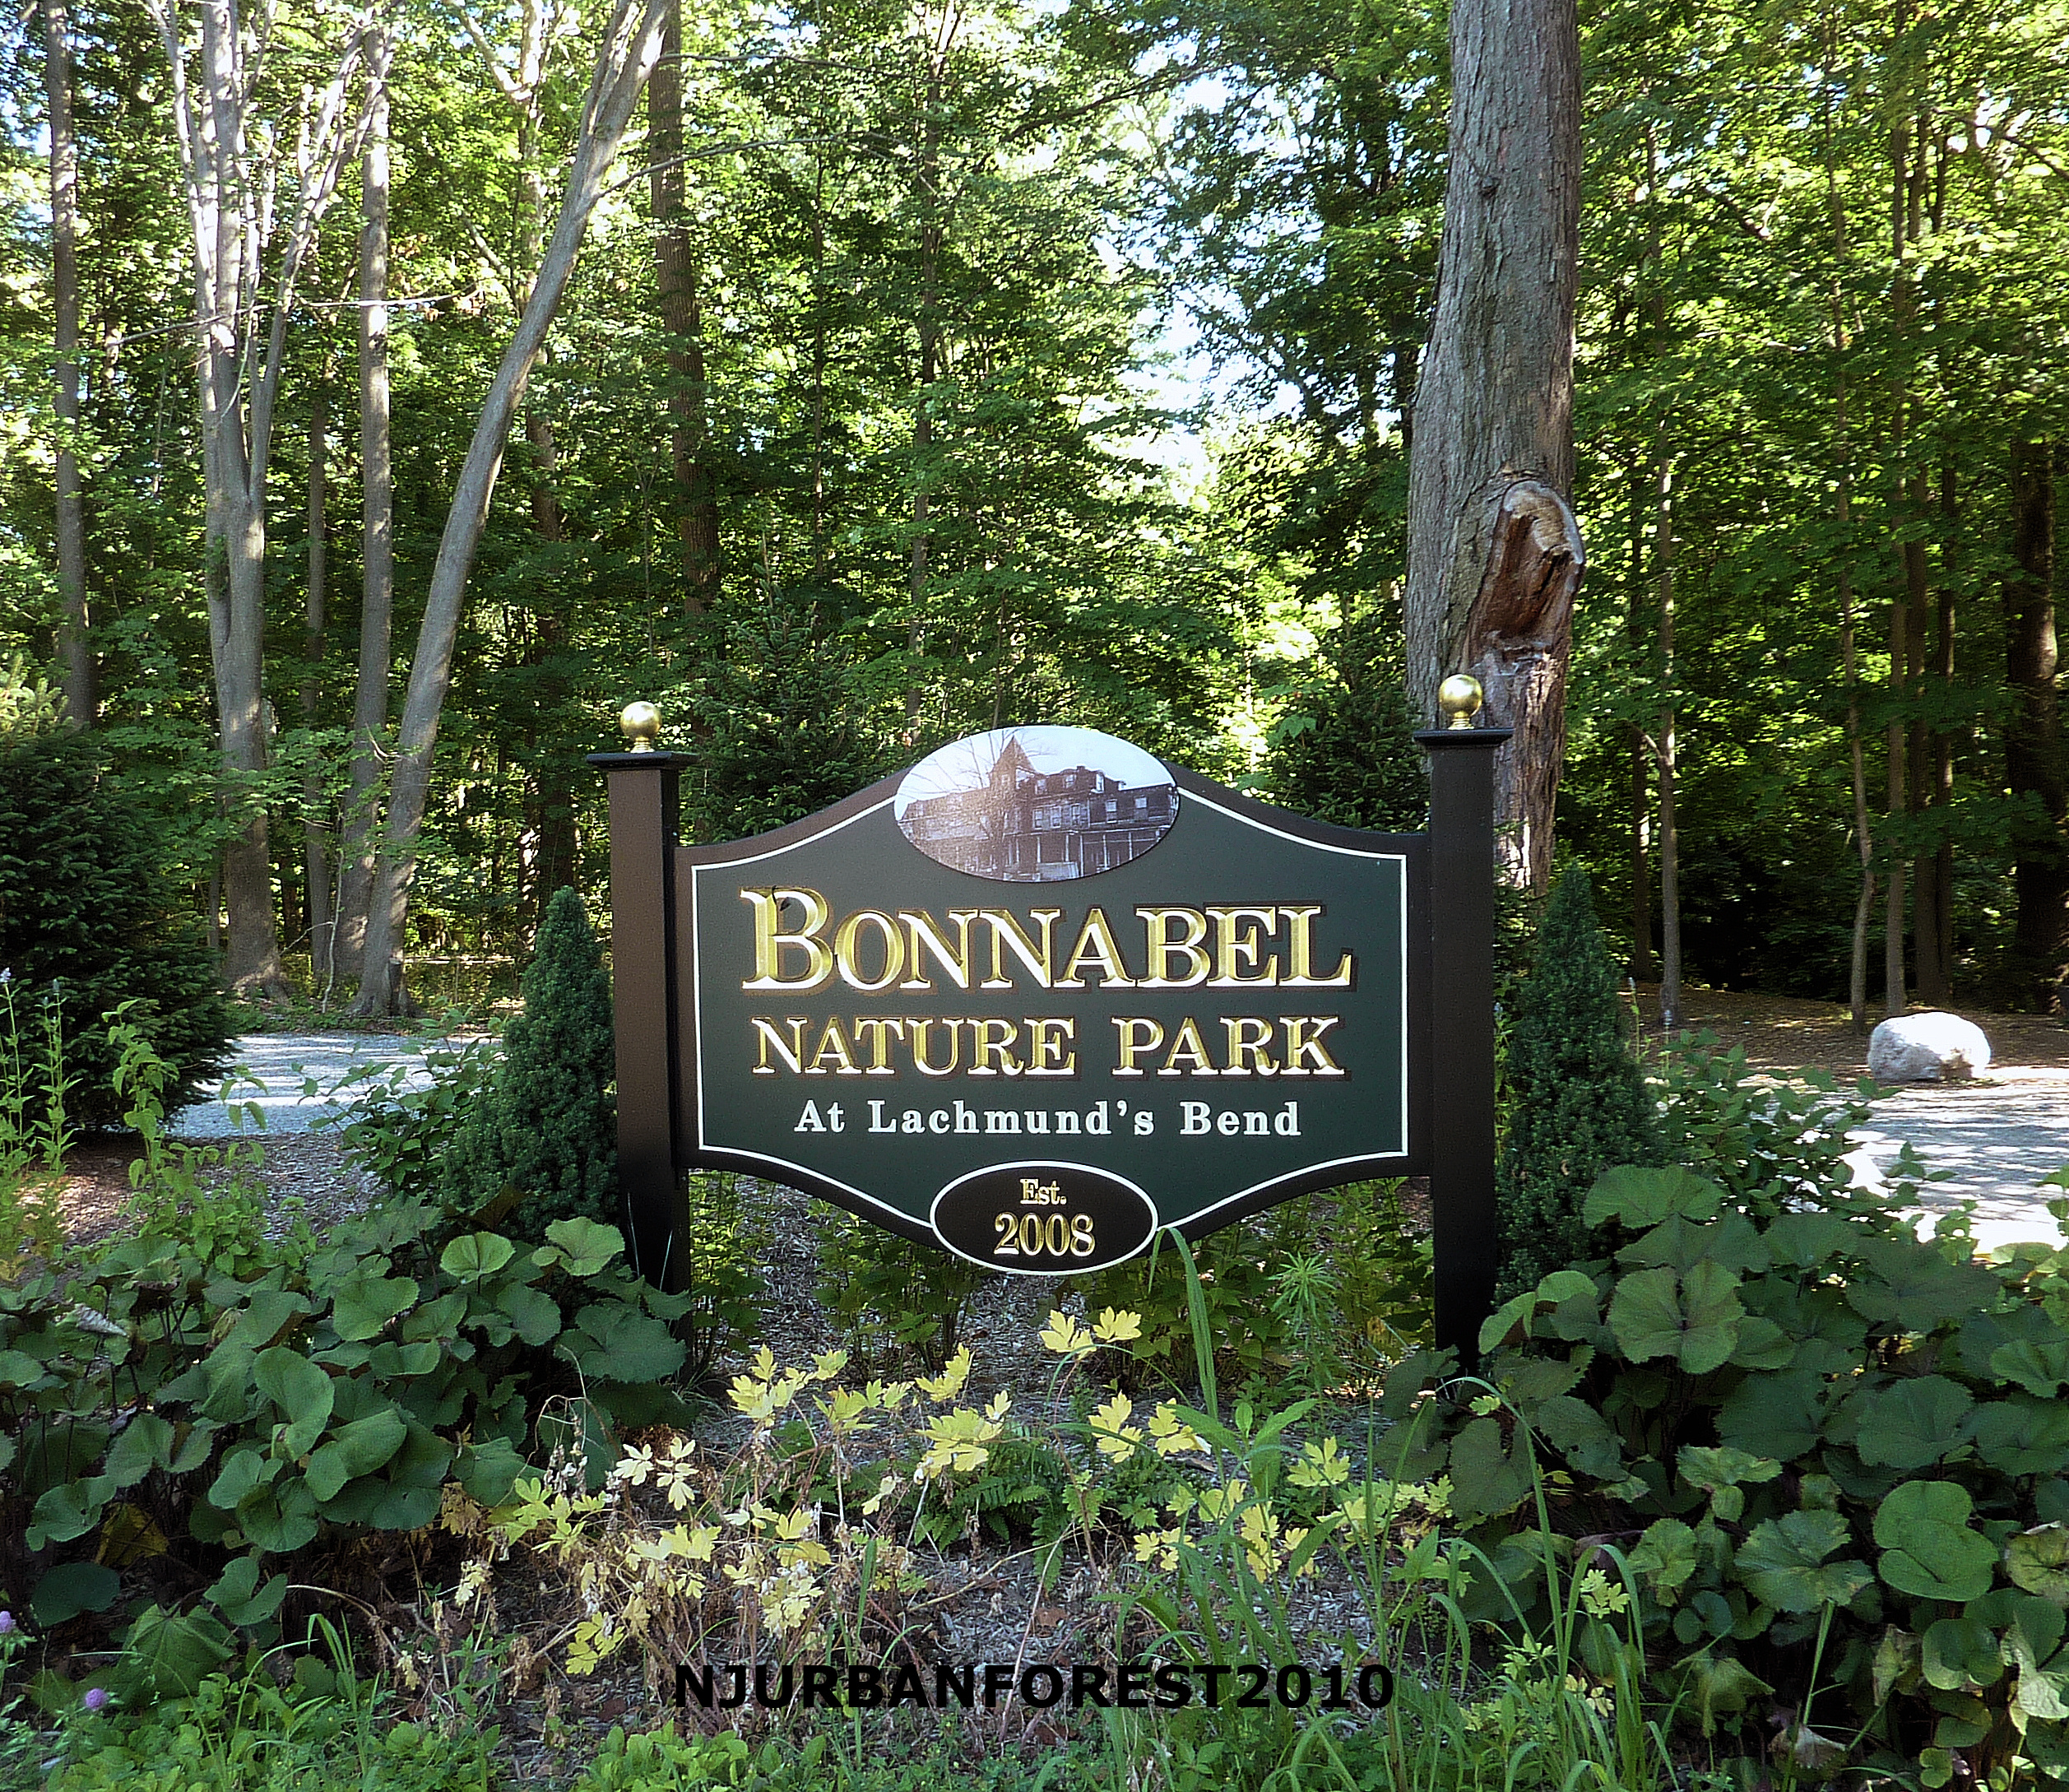 Bonnabel Nature Park at Lachmund's Bend! | NJUrbanForest.com